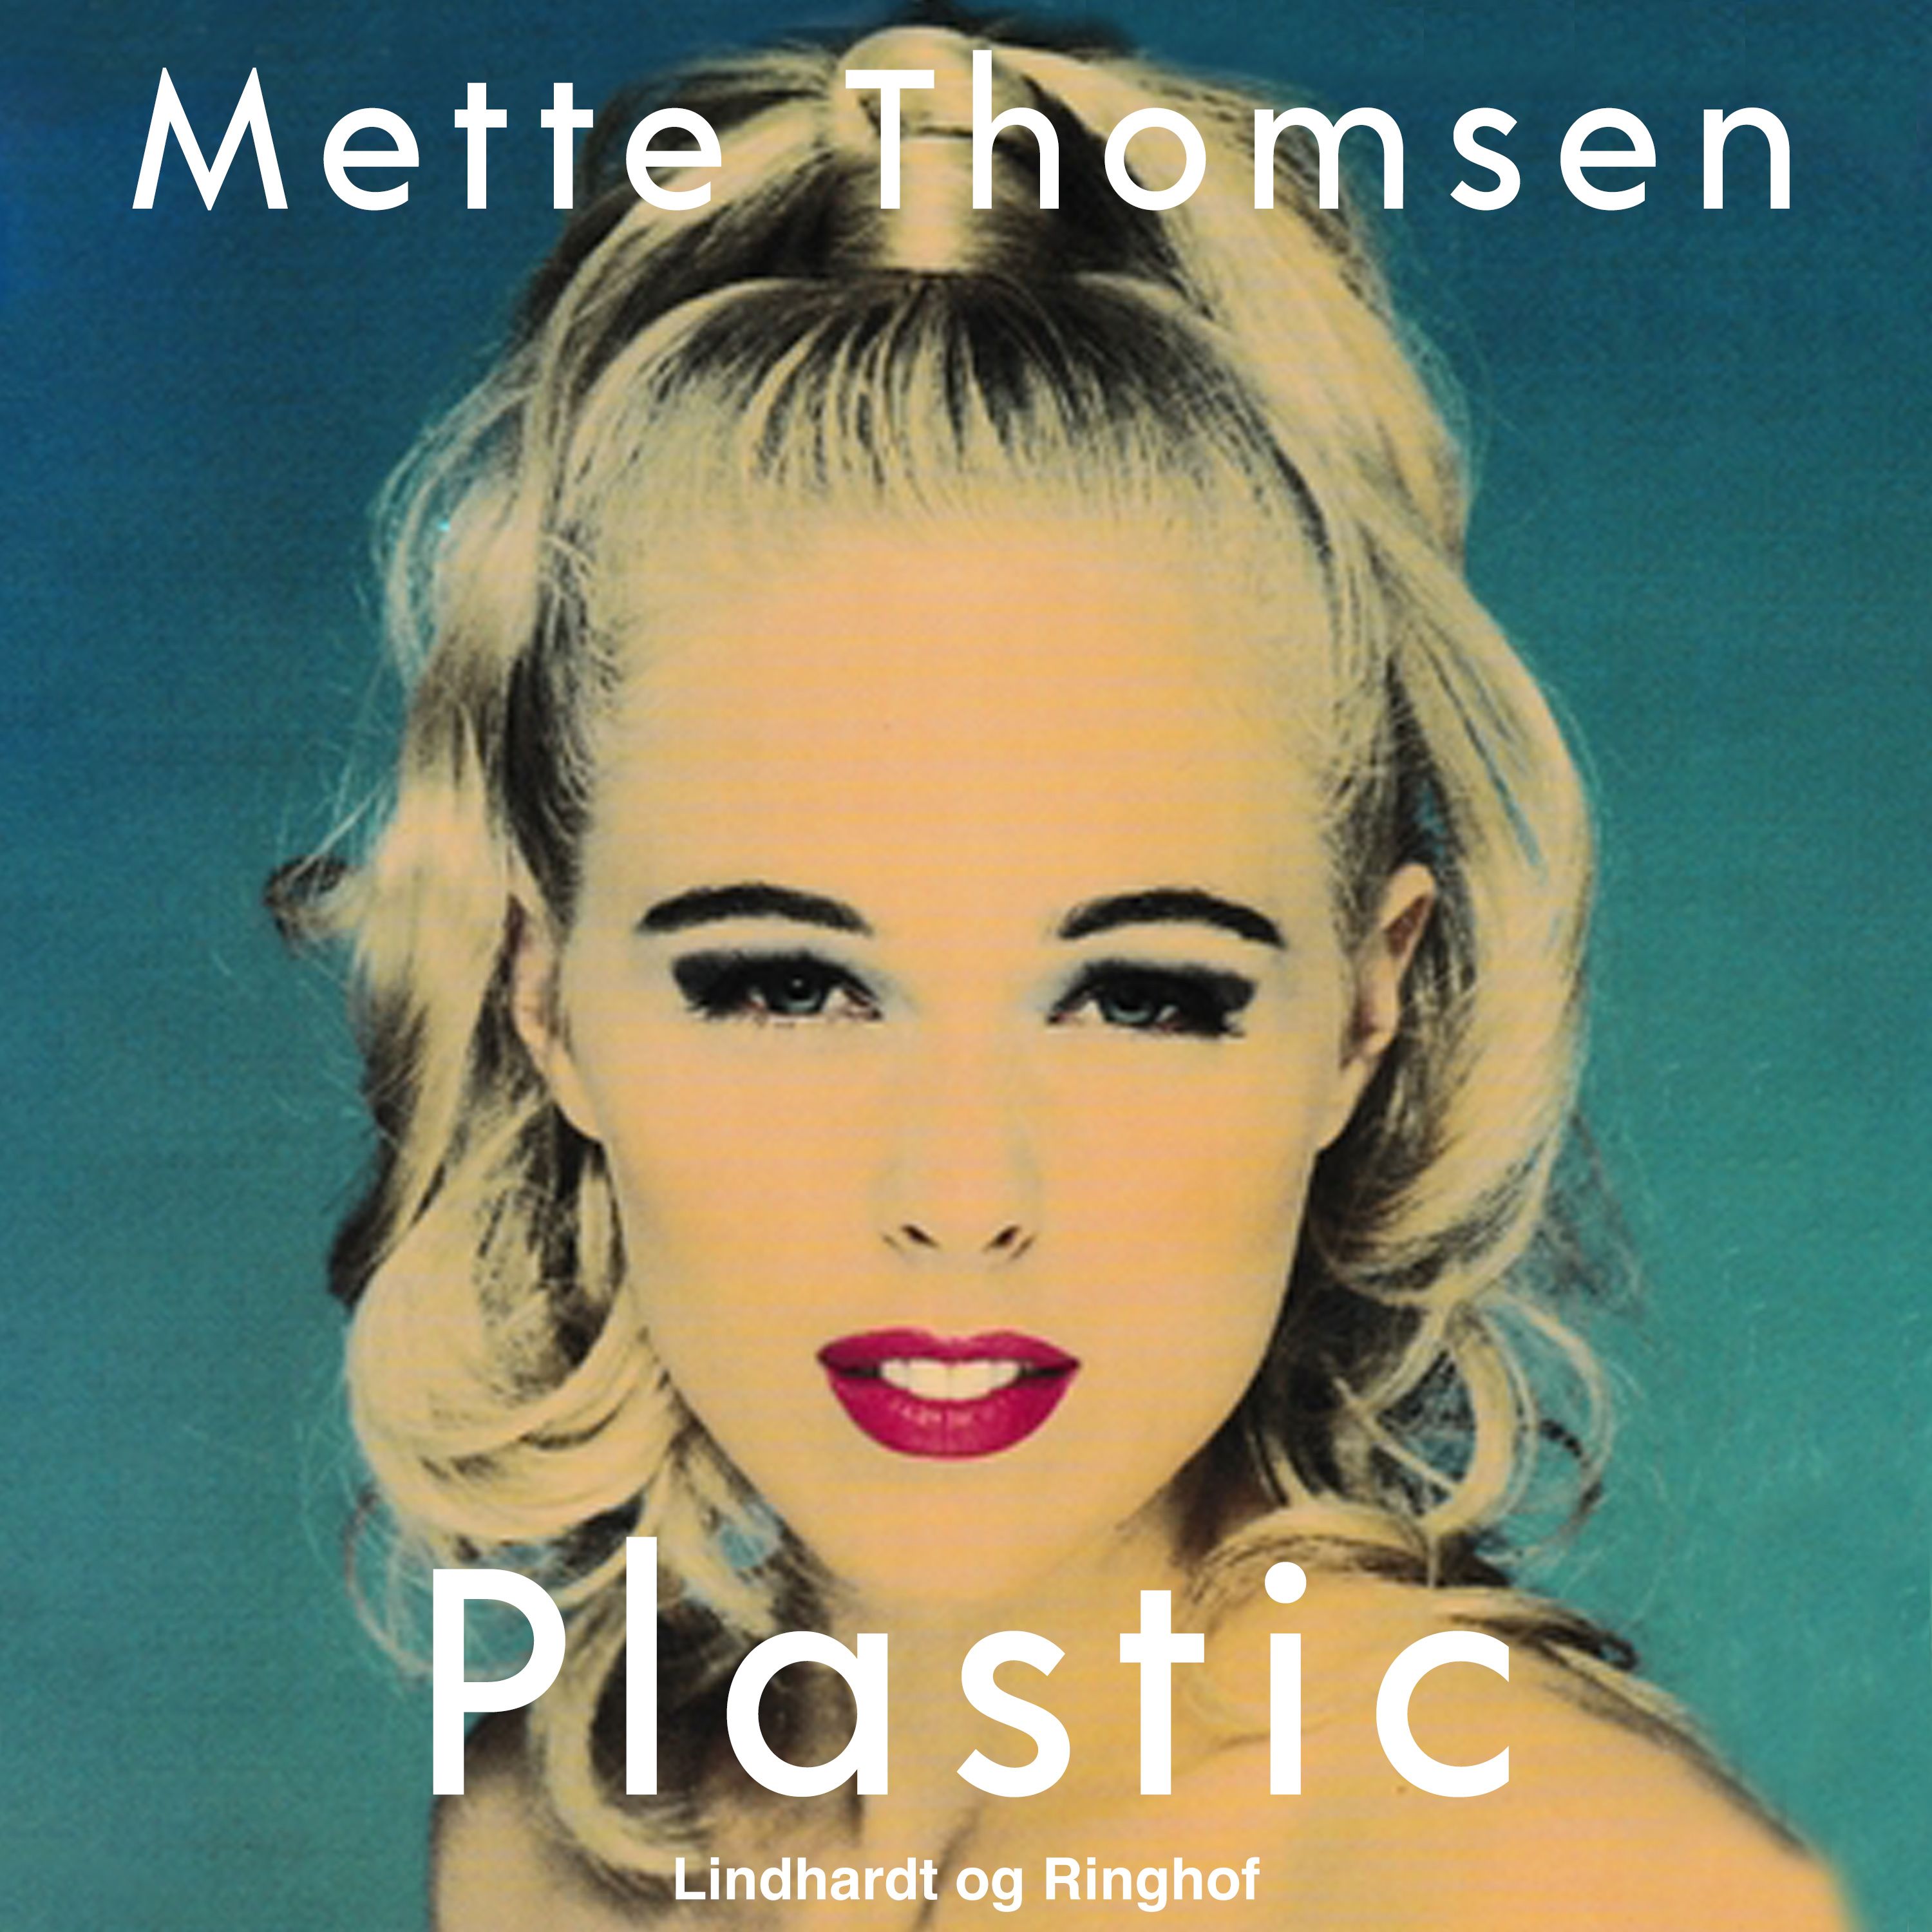 Plastic, audiobook by Mette Thomsen